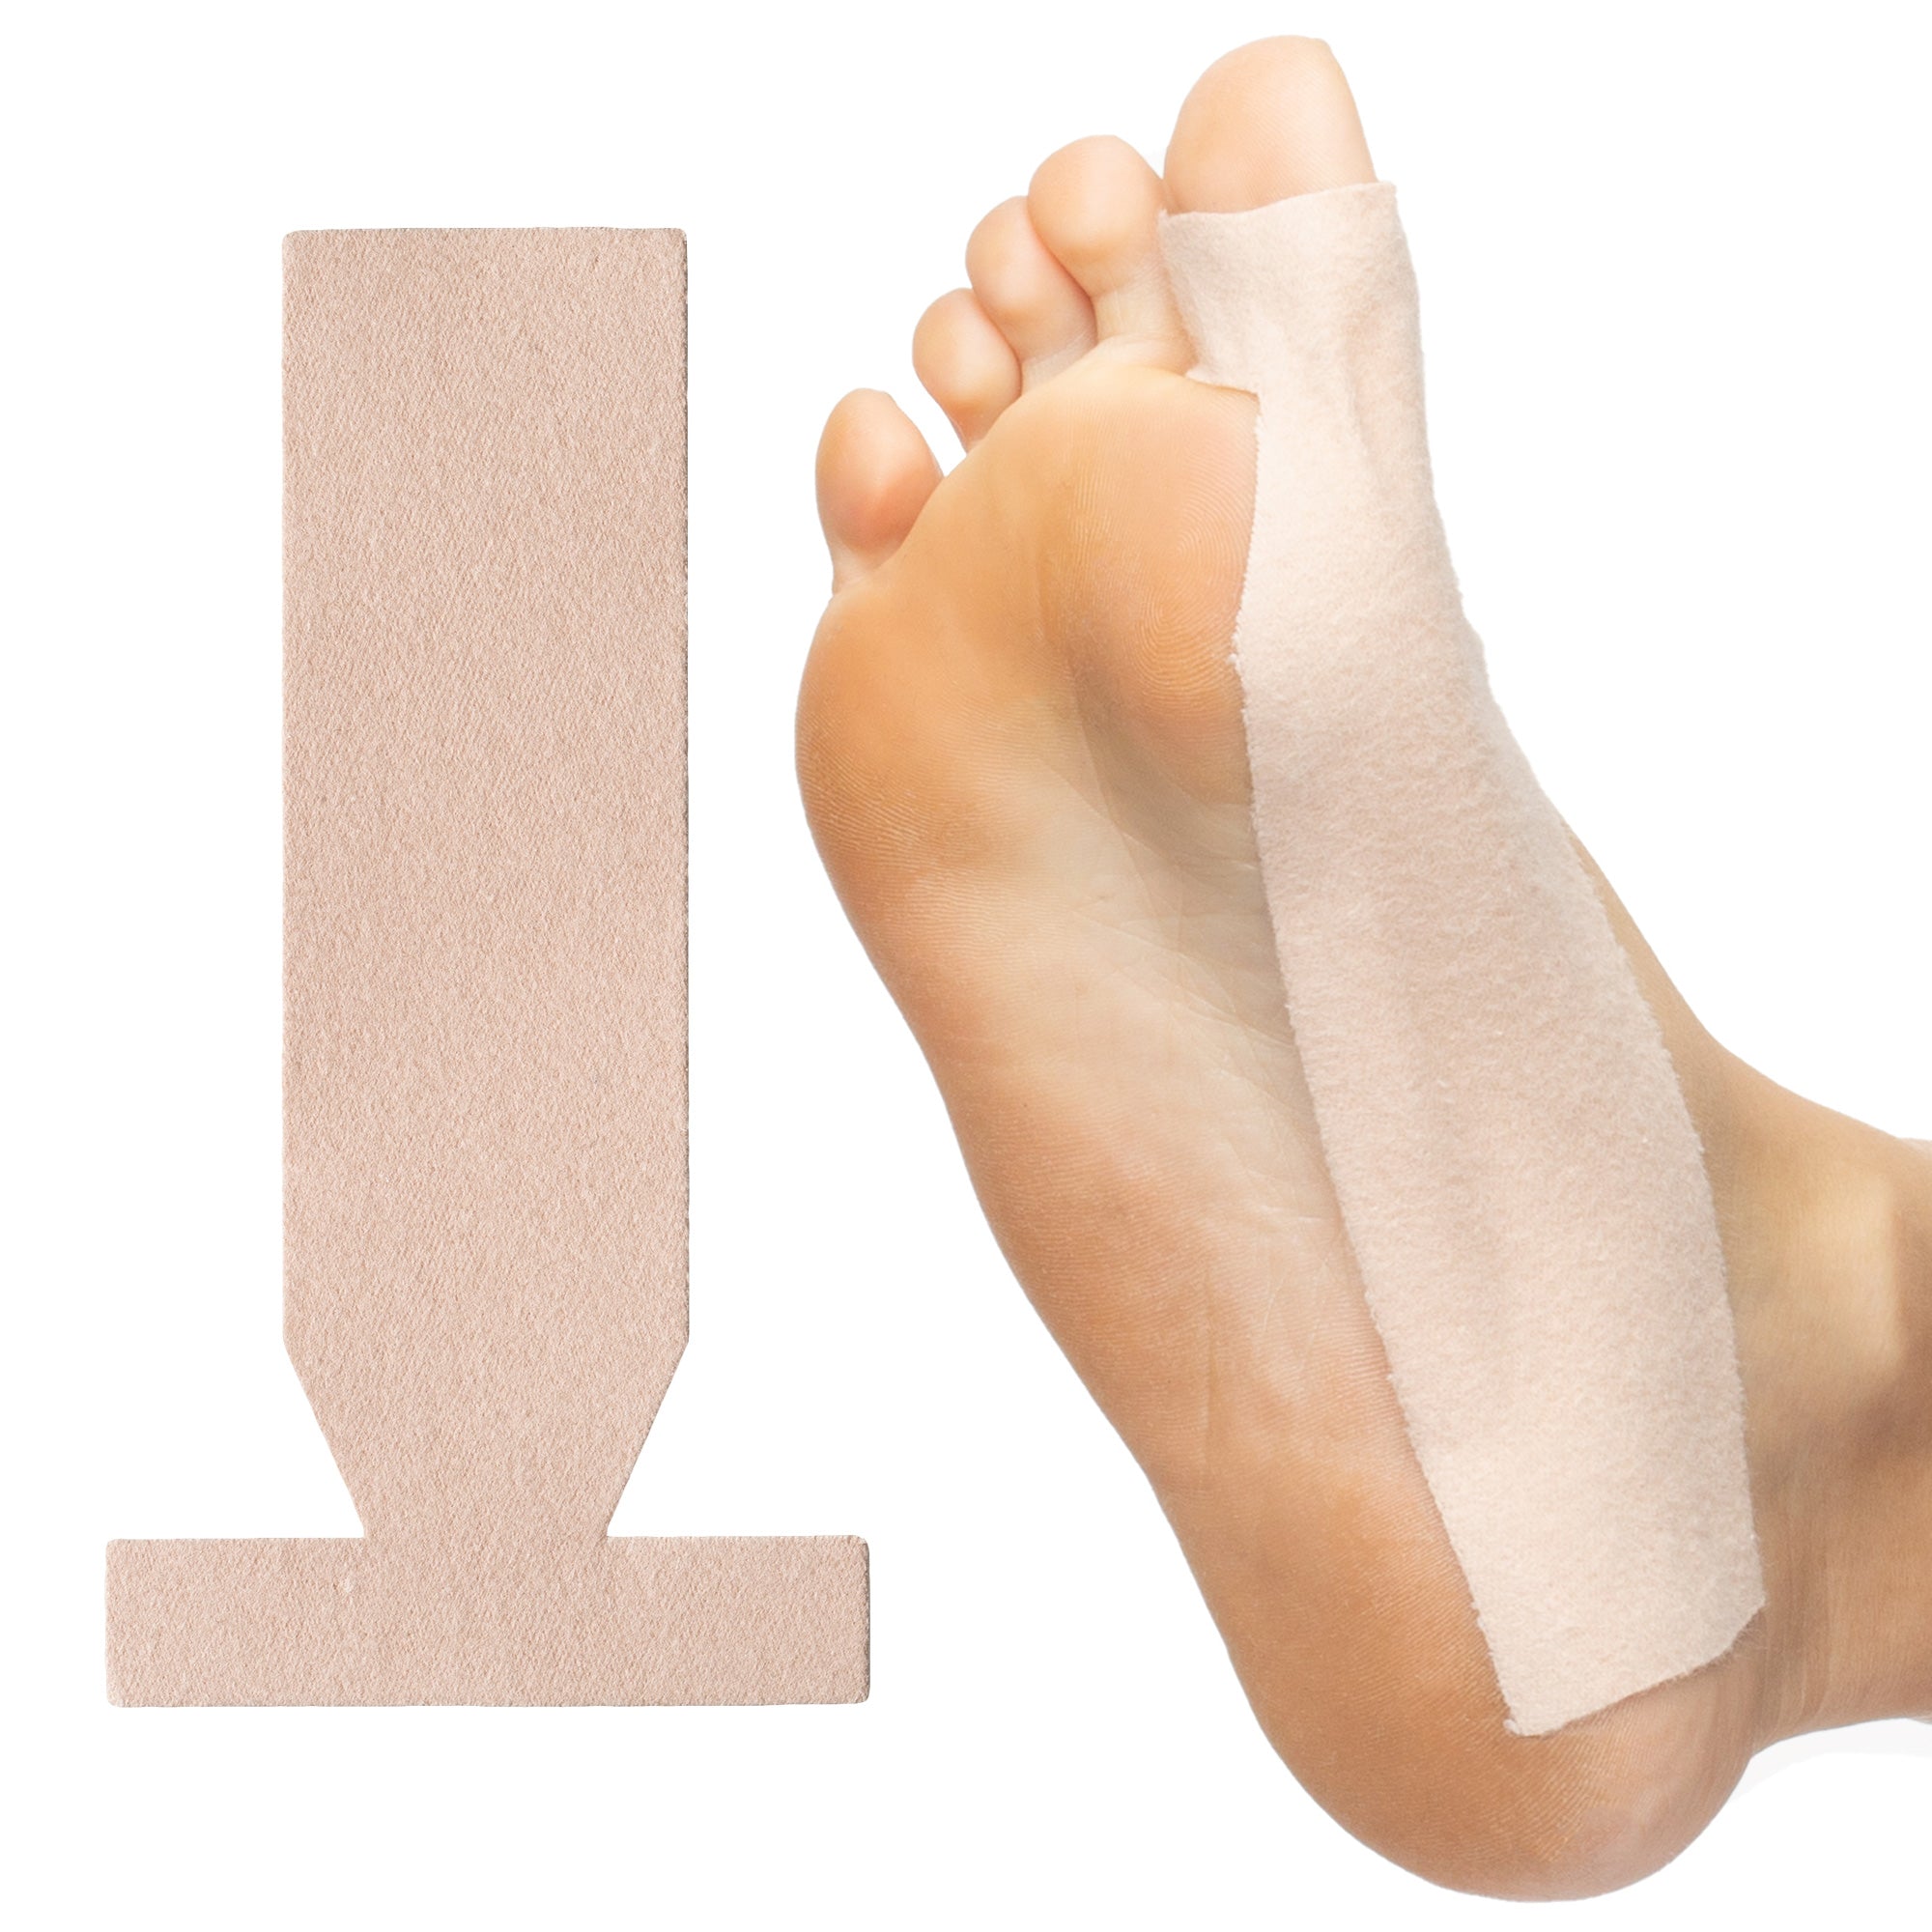 Turf Toe Treatment Brace  Sprained Big Toe Injury Relief